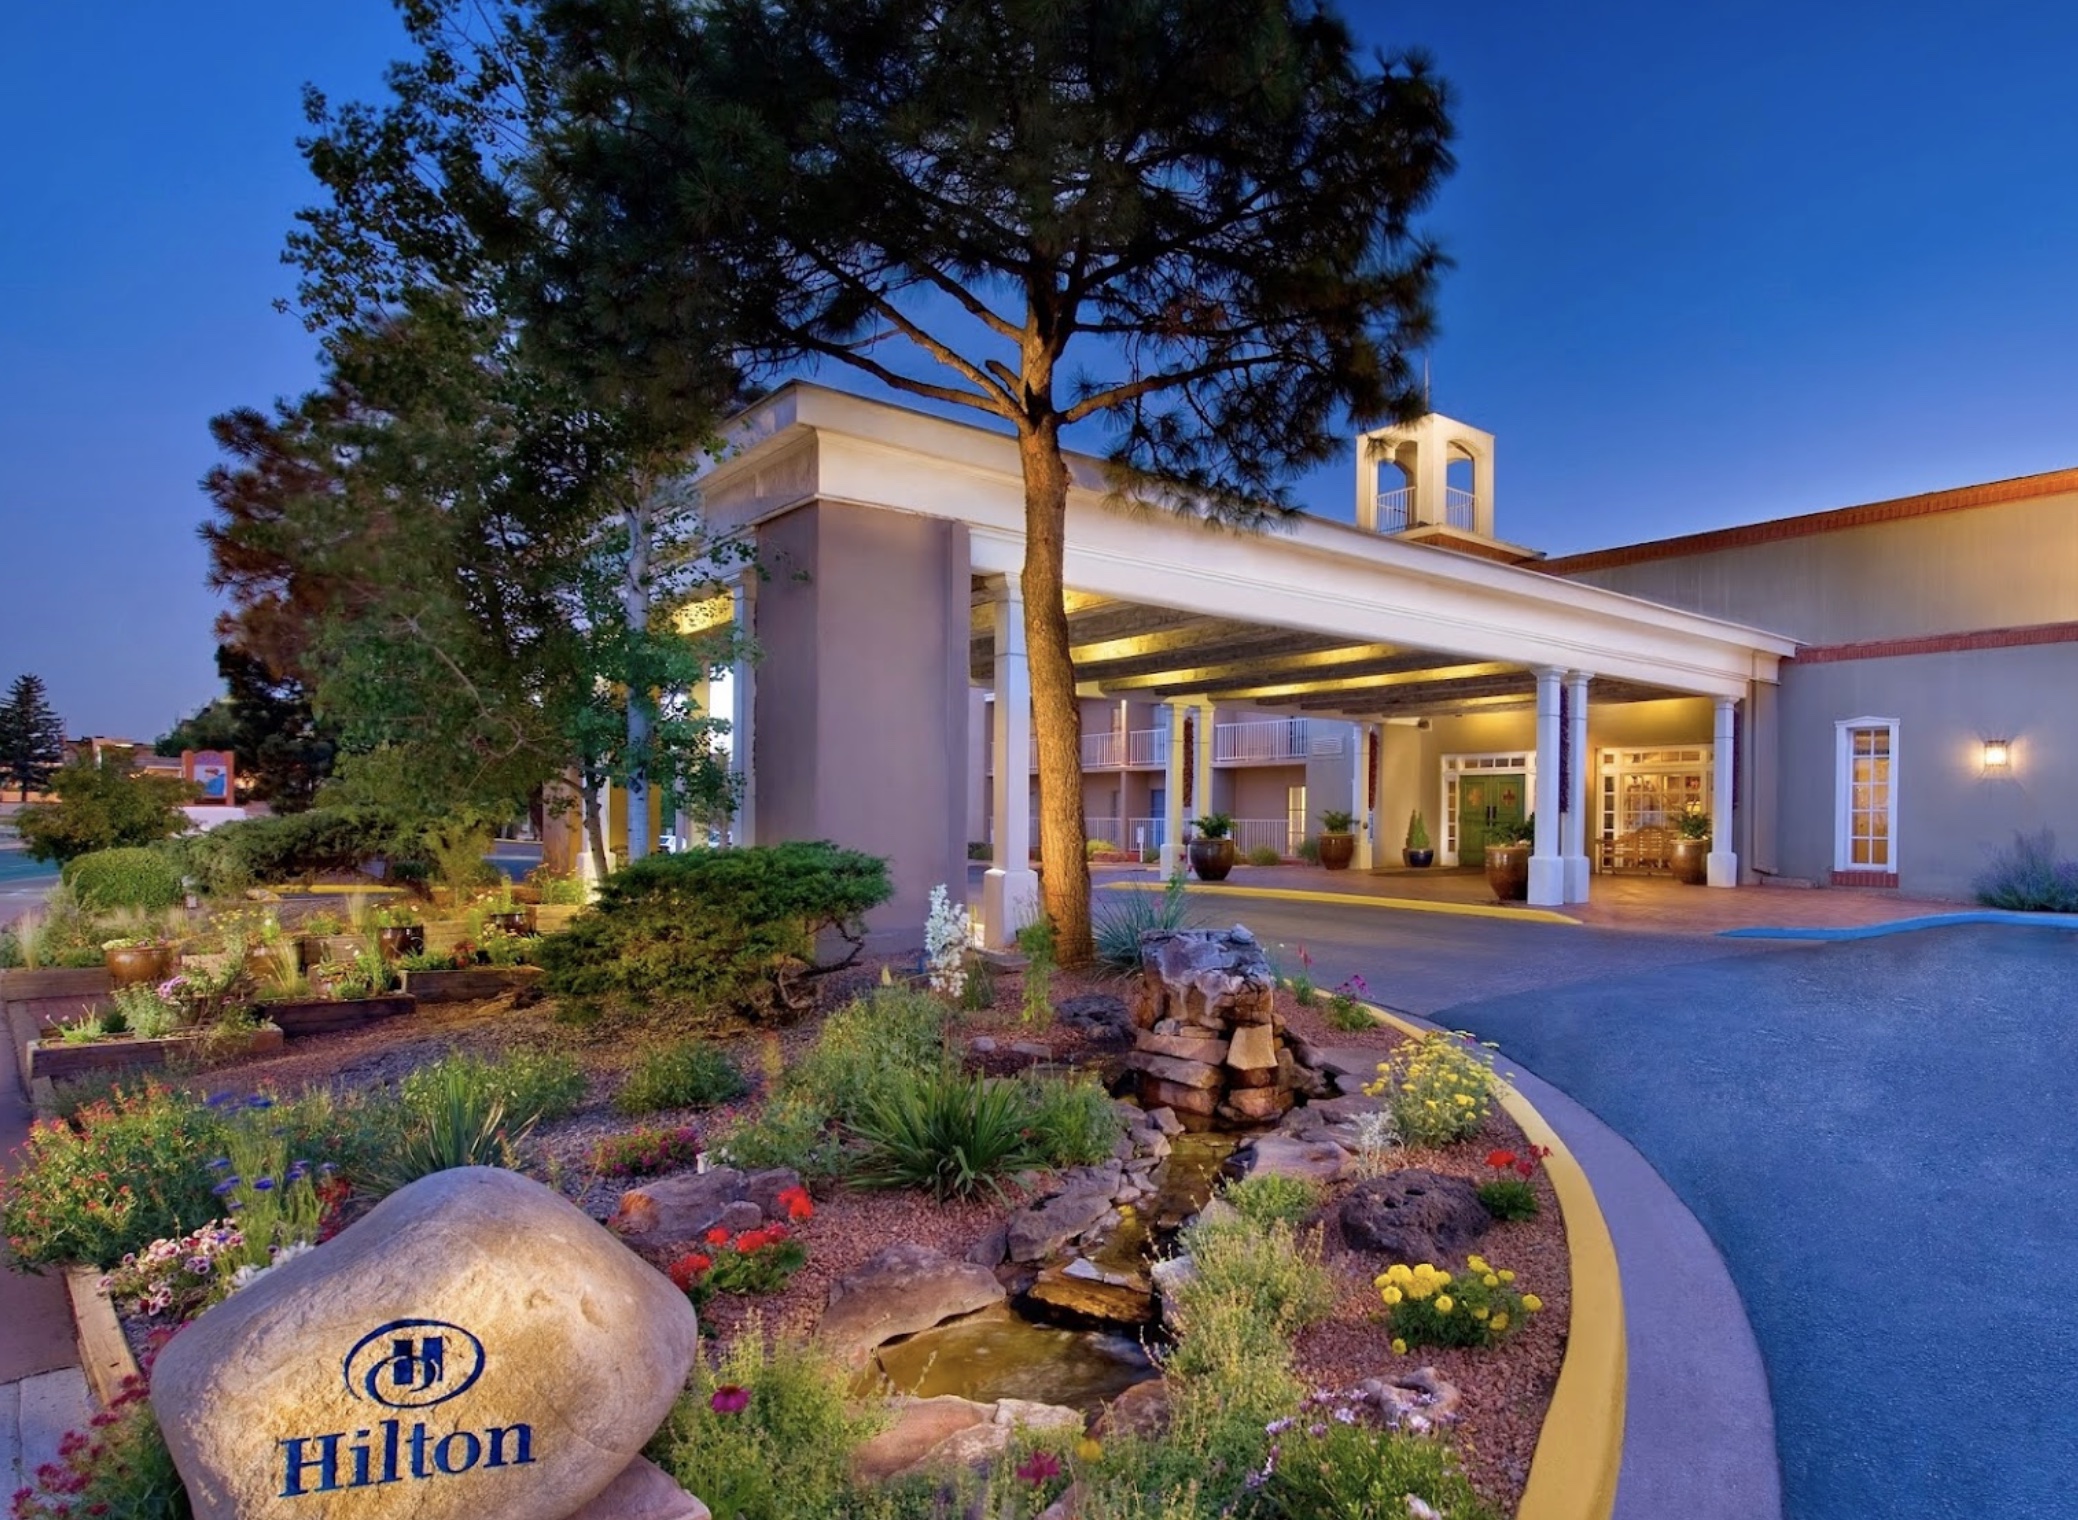 Hilton Hotel Santa Fe